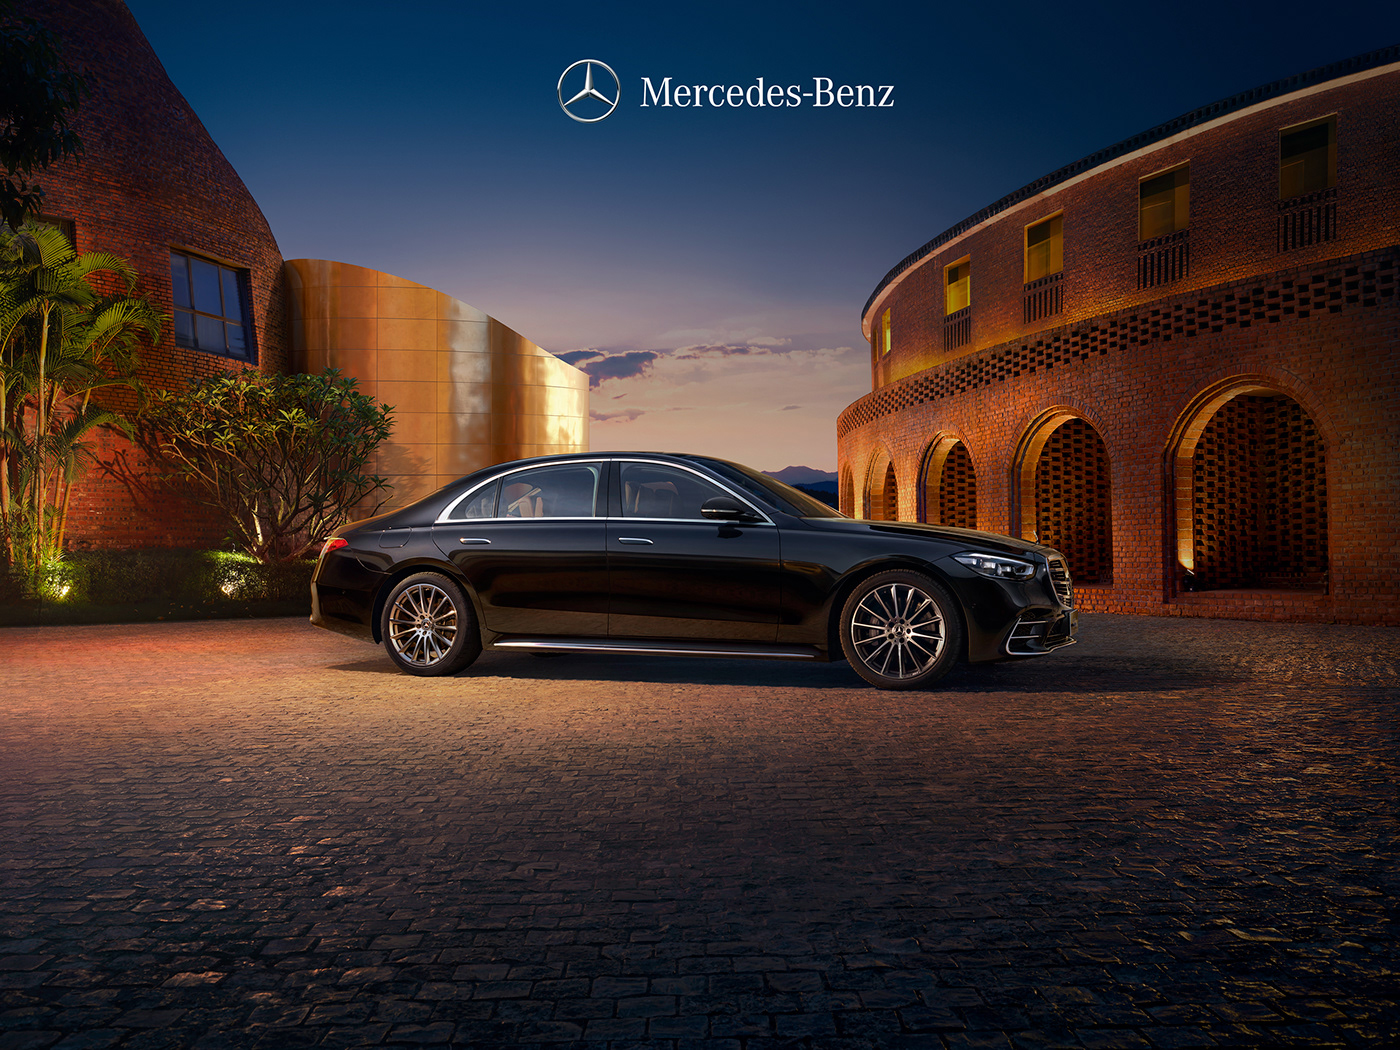 mercedes-benz S-Class car photography Car Photographer Mercedes-Benz S-class car luxury Chinese Architecture modern architecture Villa